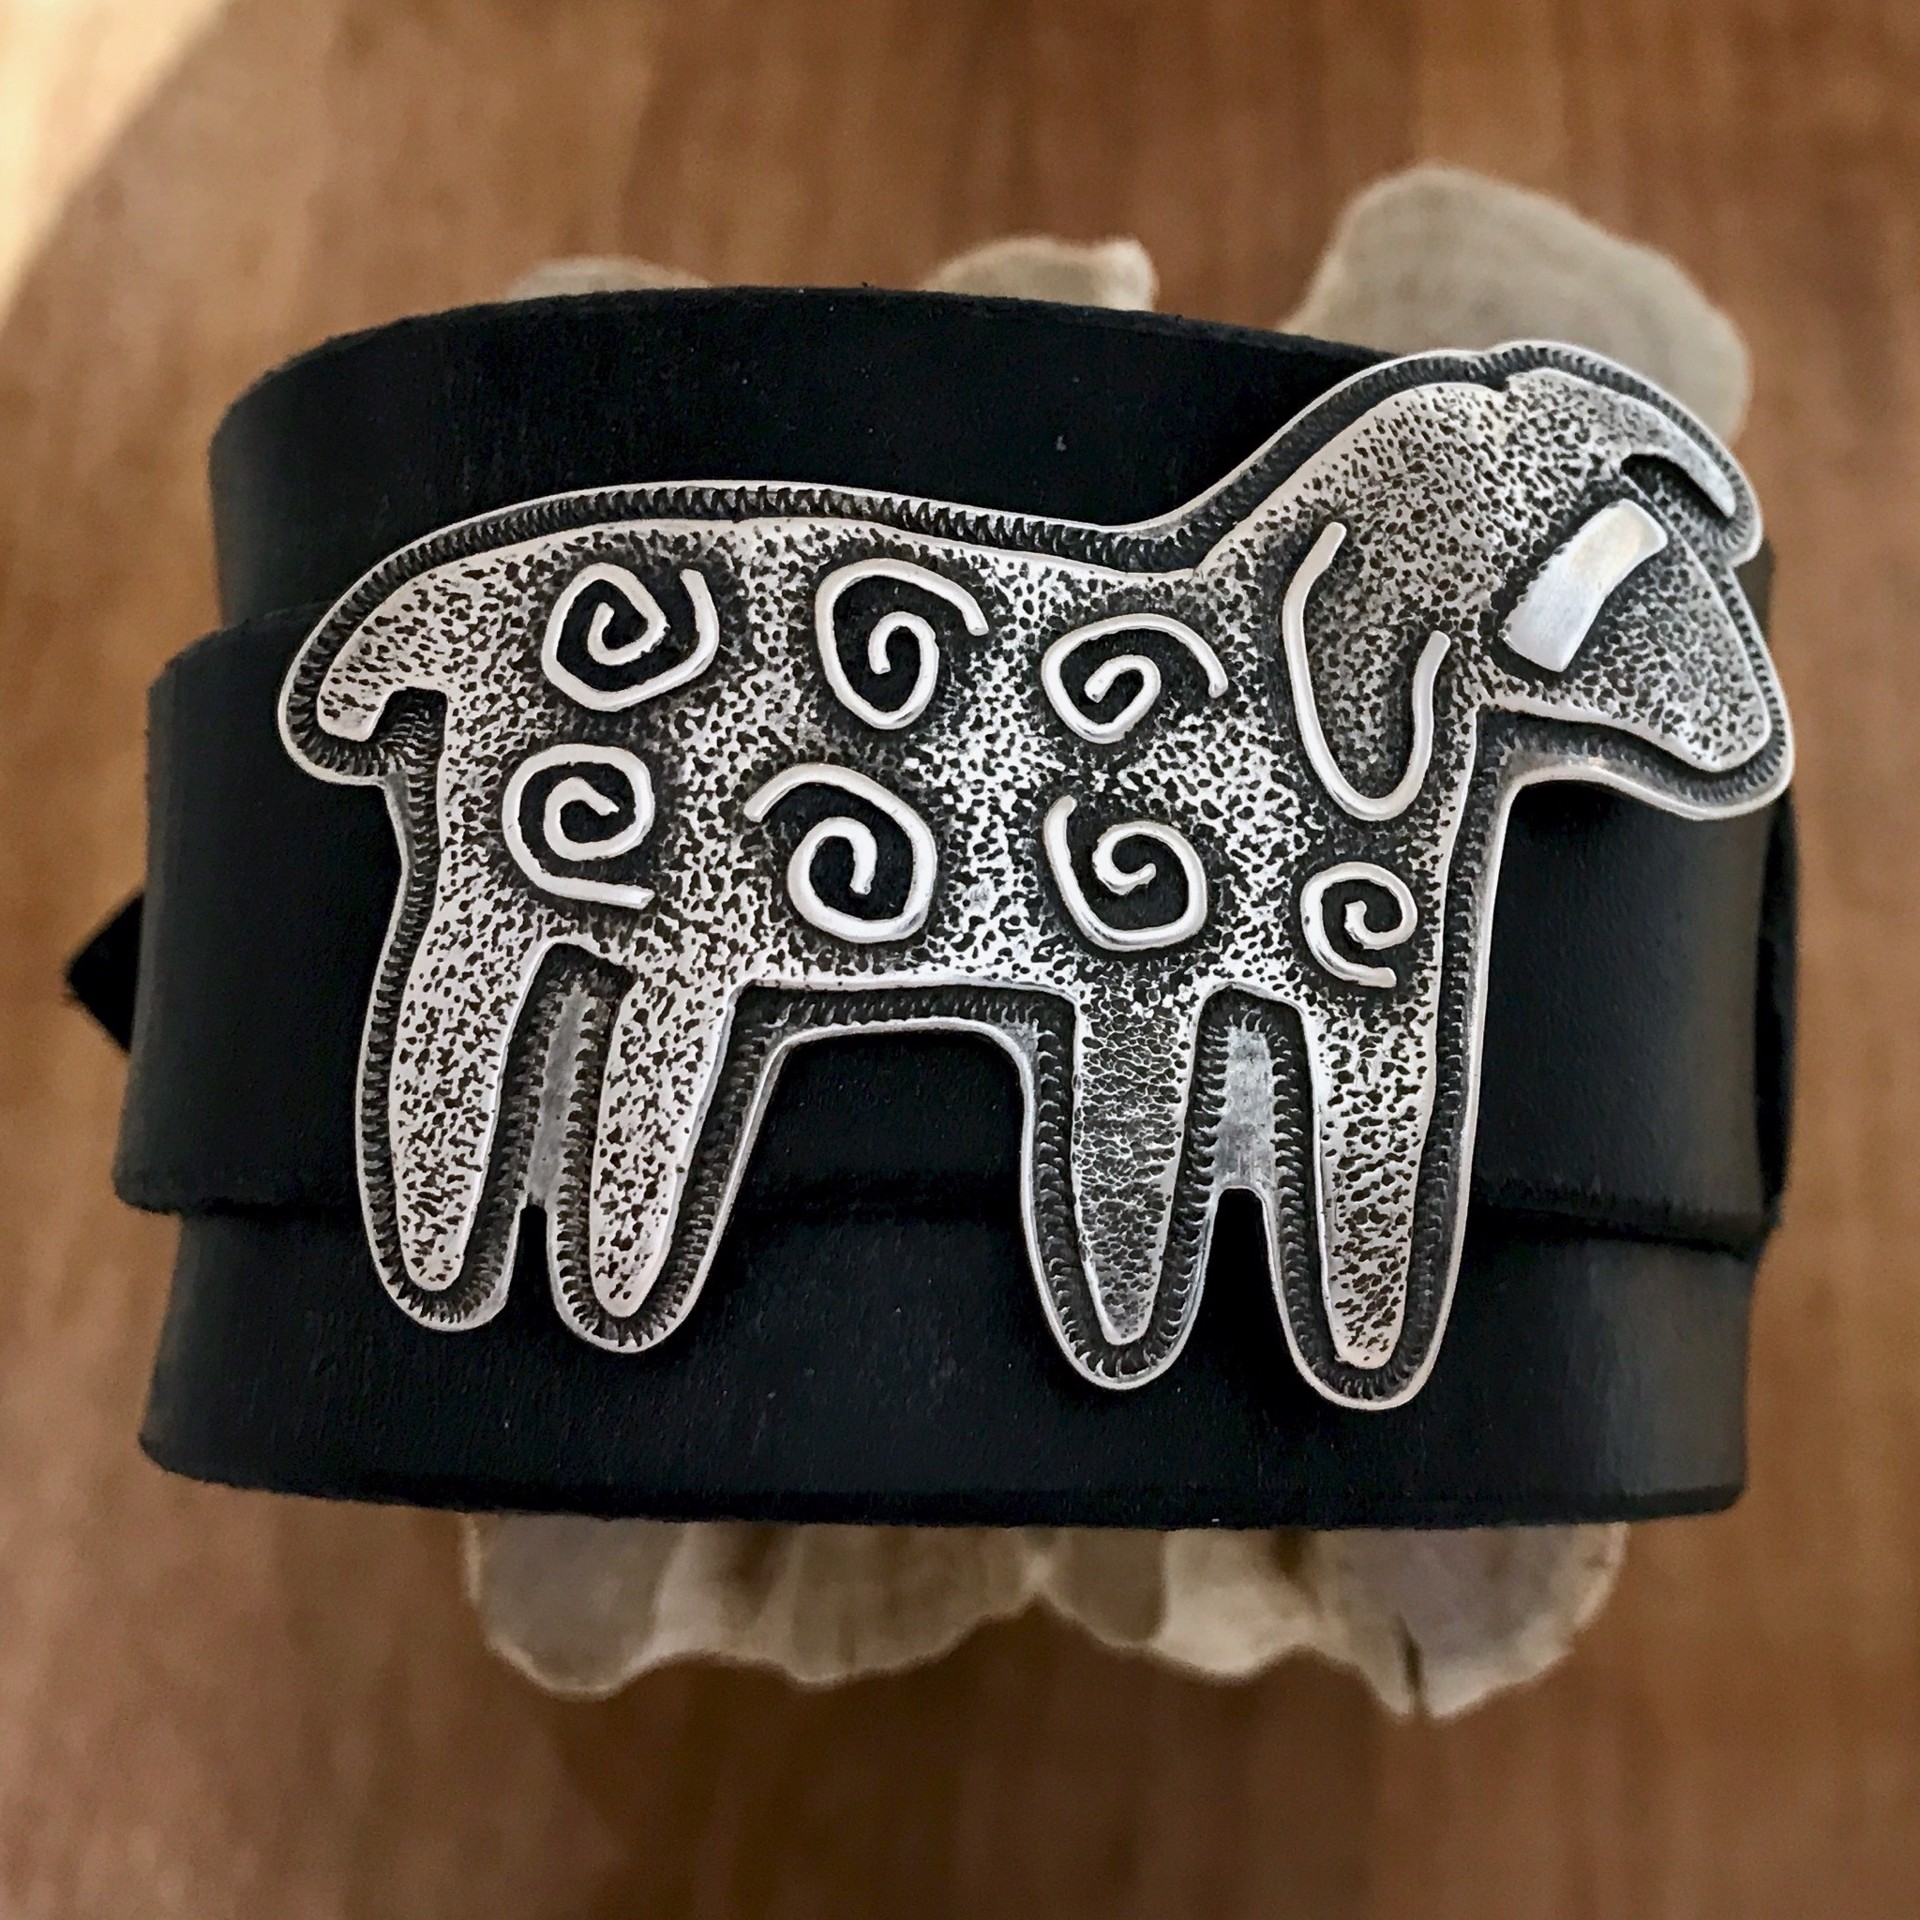 Curly Sheep Leather Cuff bracelet by Melanie A. Yazzie